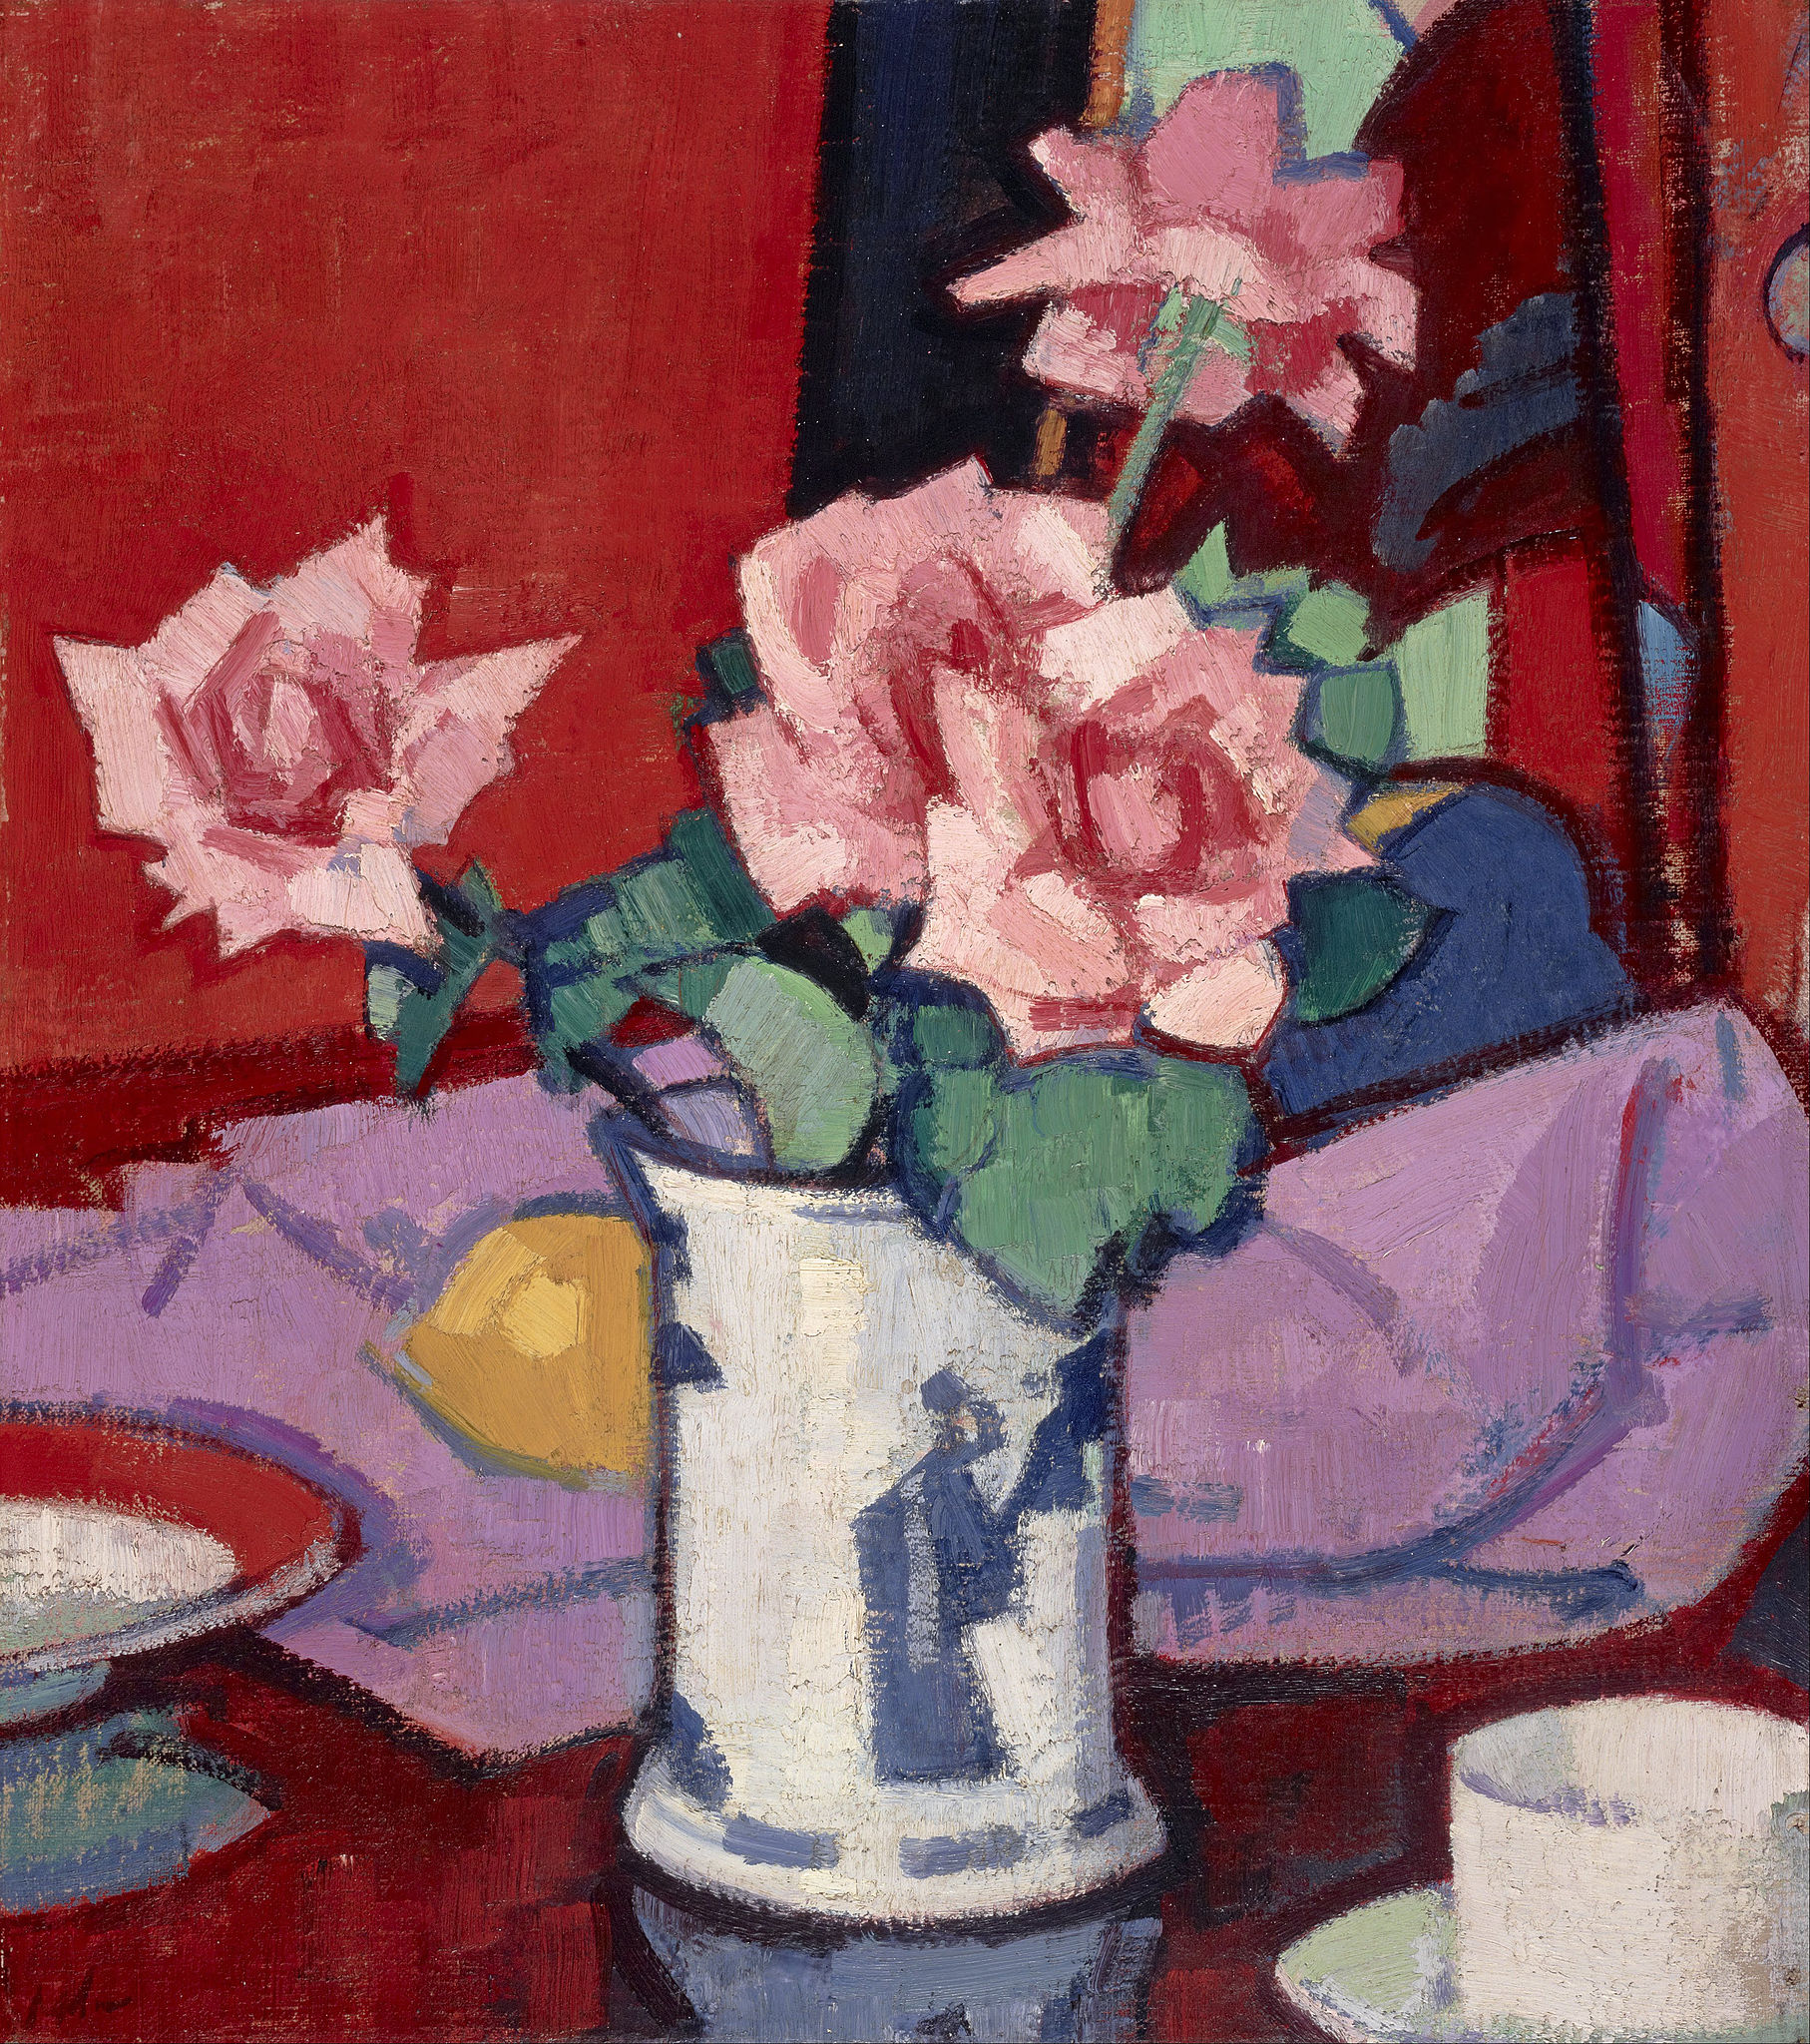 Pink Roses, Chinese Vase by Samuel John Peploe - 1916 - 45.7 x 41 cm National Galleries of Scotland